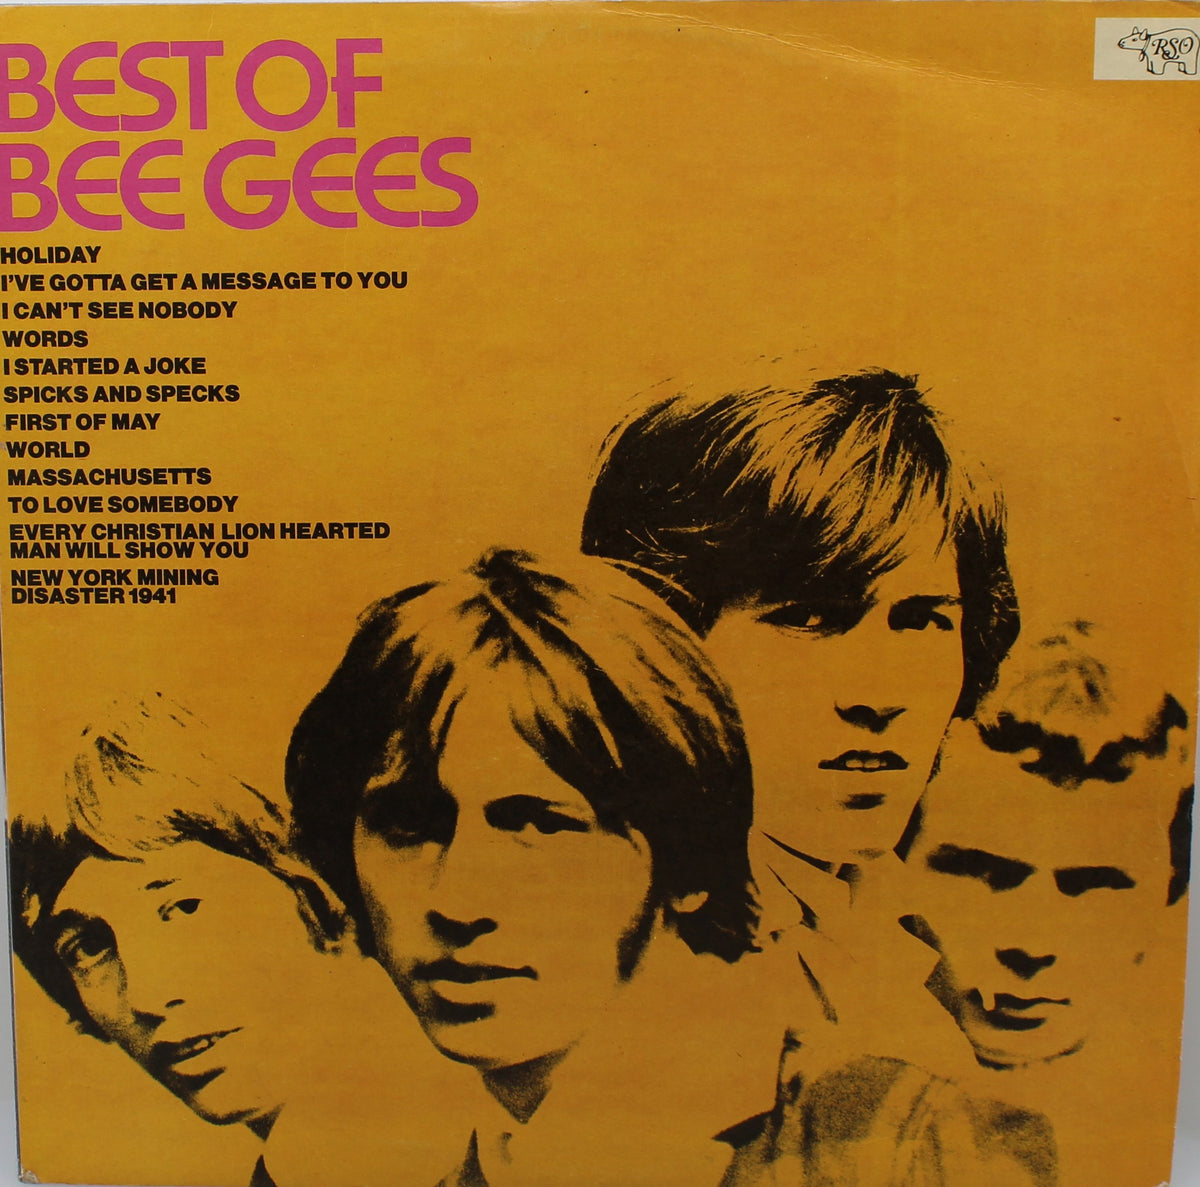 Bee Gees – Best Of Bee Gees, Vinyl, LP, Compilation, Colombia 1969